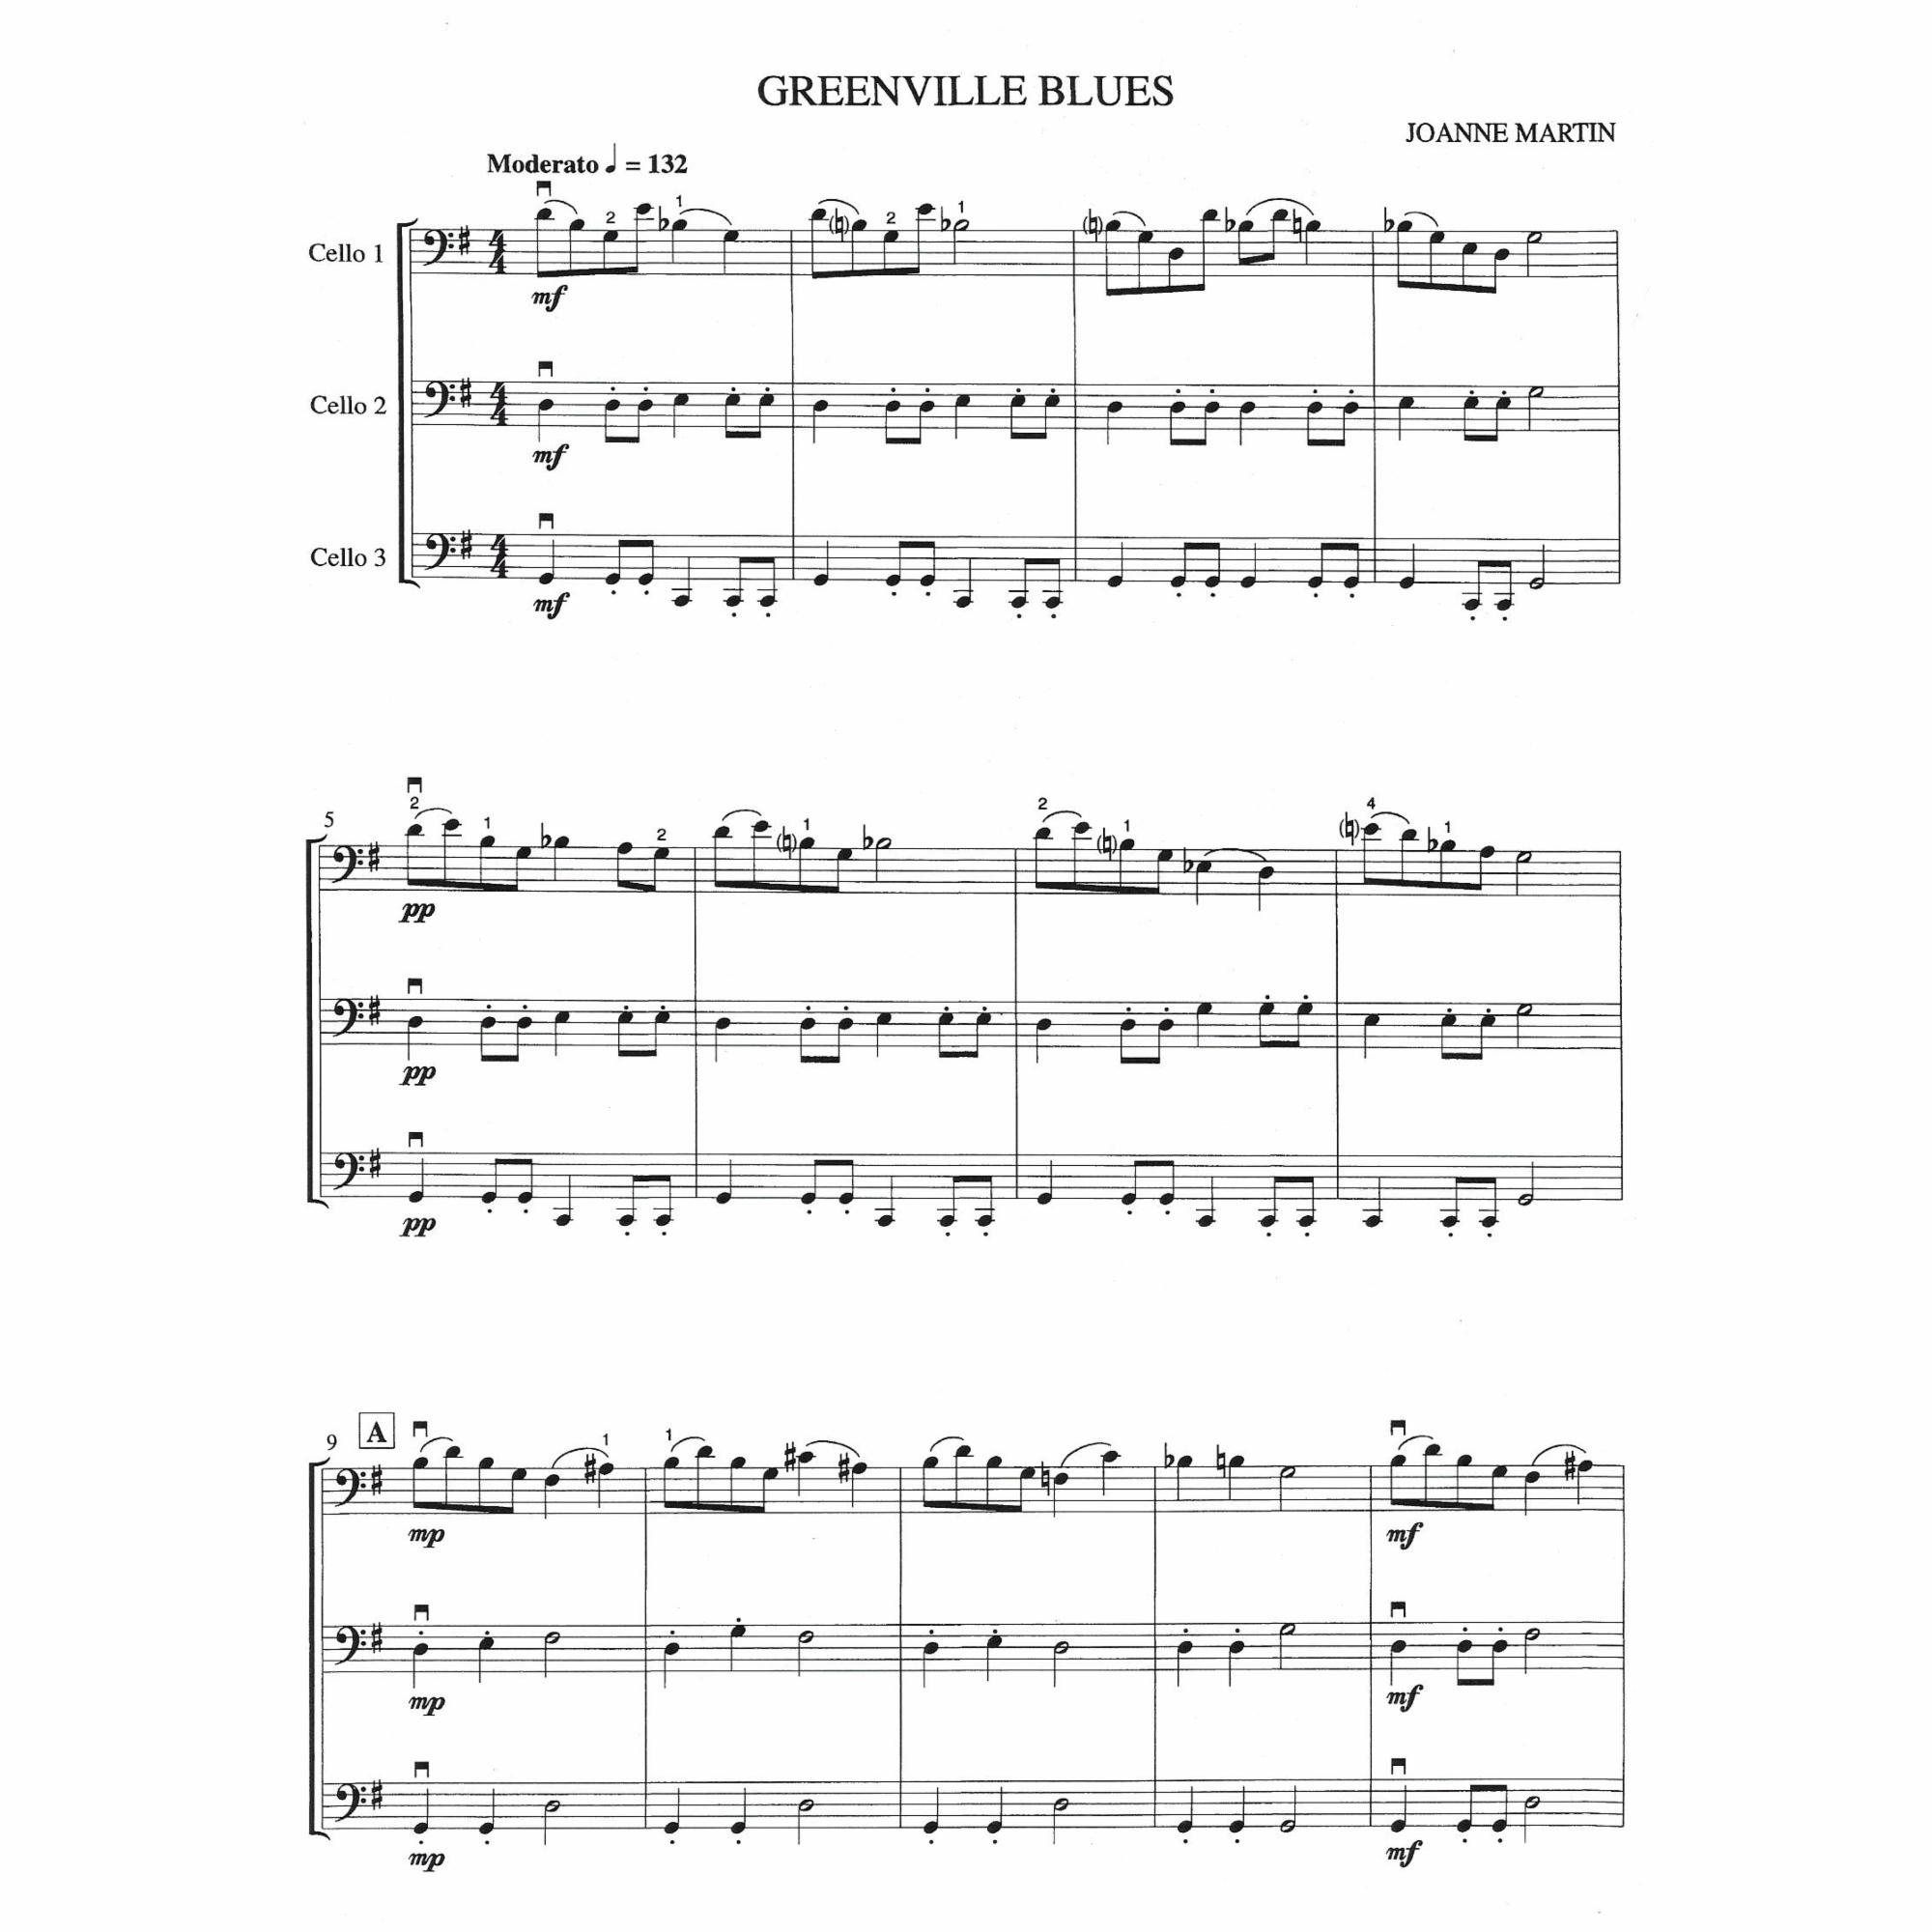 Sample: Three Cellos (Pg. 16)